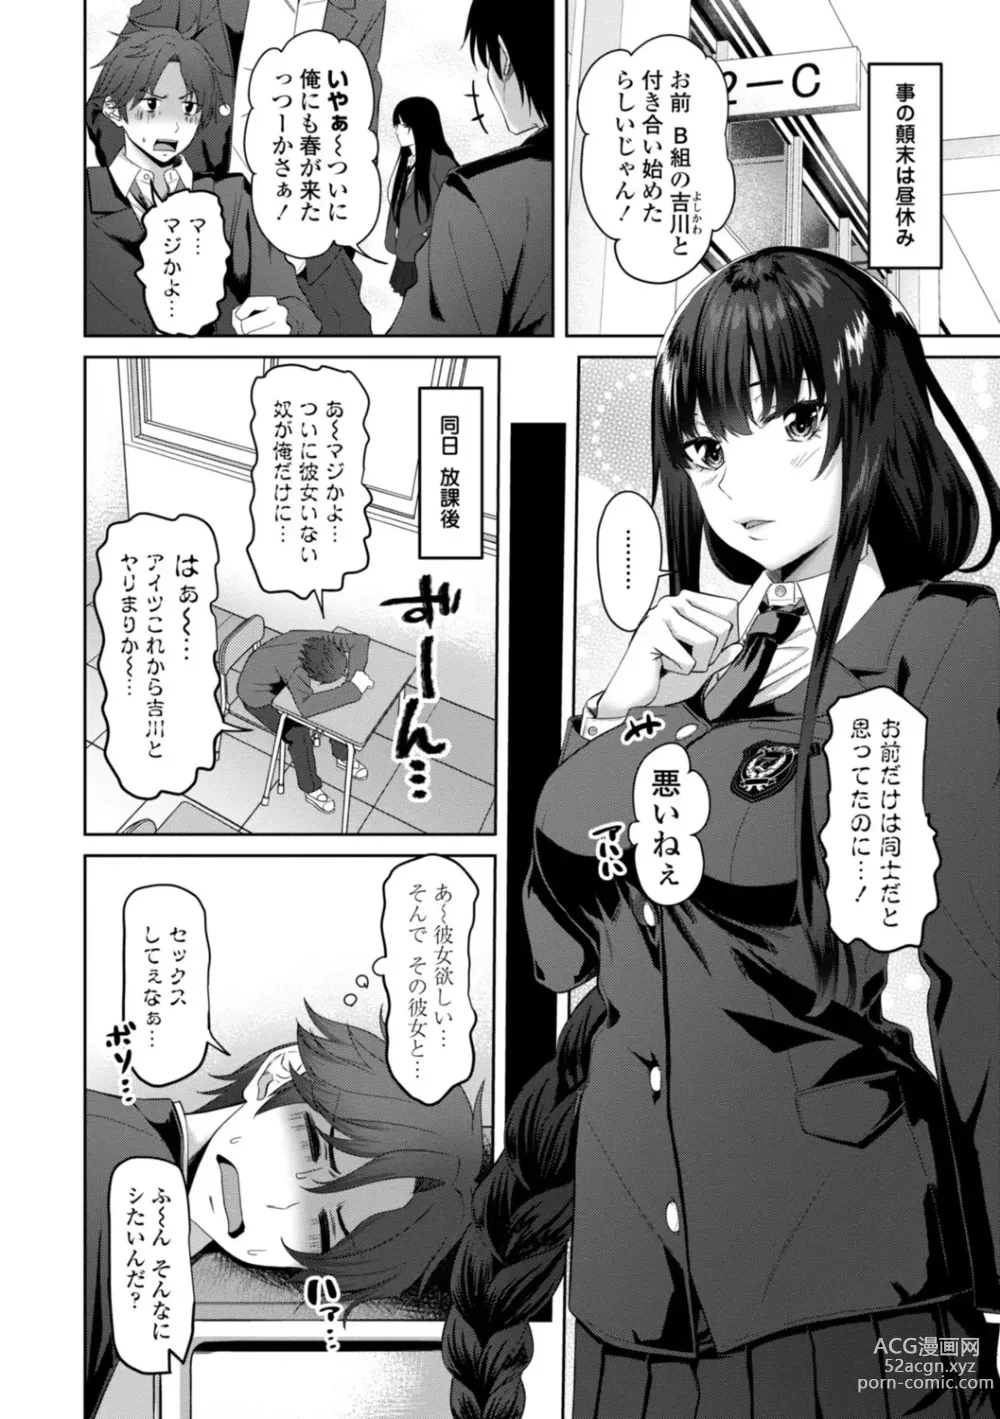 Page 4 of manga Watashi o SeFri ni Shite Minai? - Would you like to try me as a sex friend? + Digital Tokusouban  Tokuten